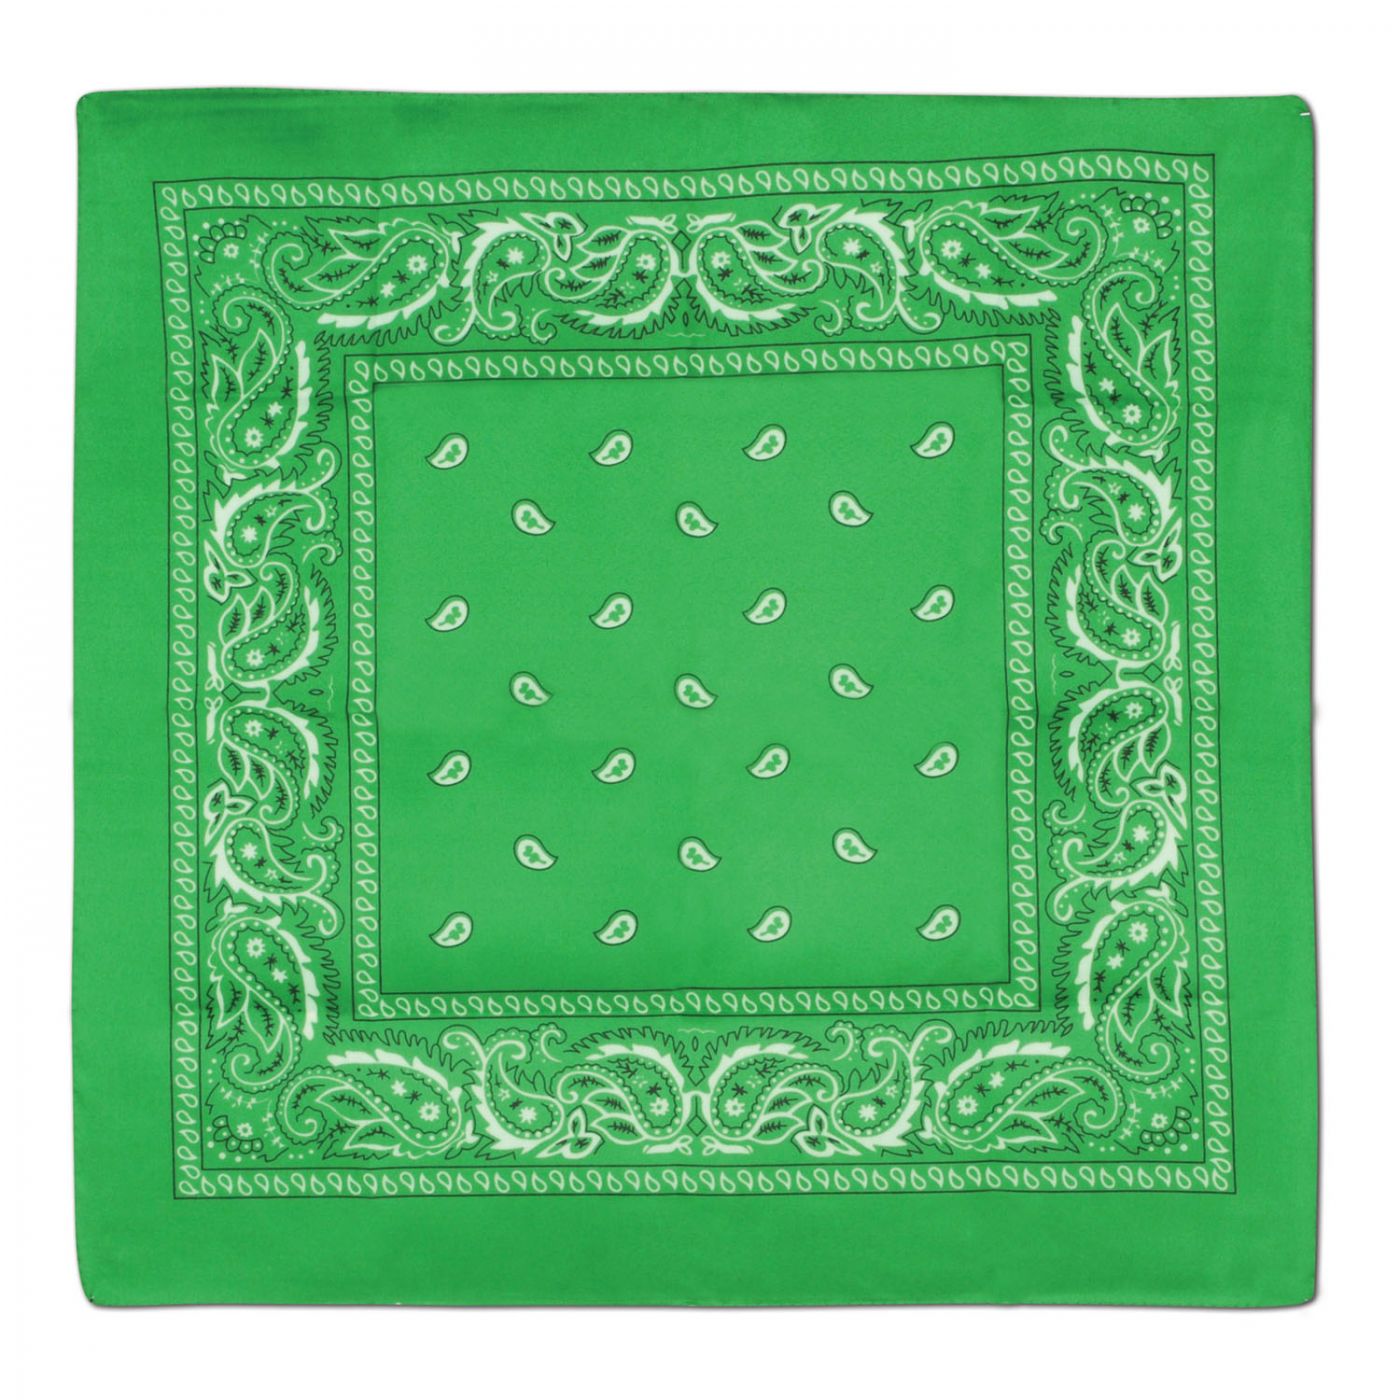 Green Bandana image